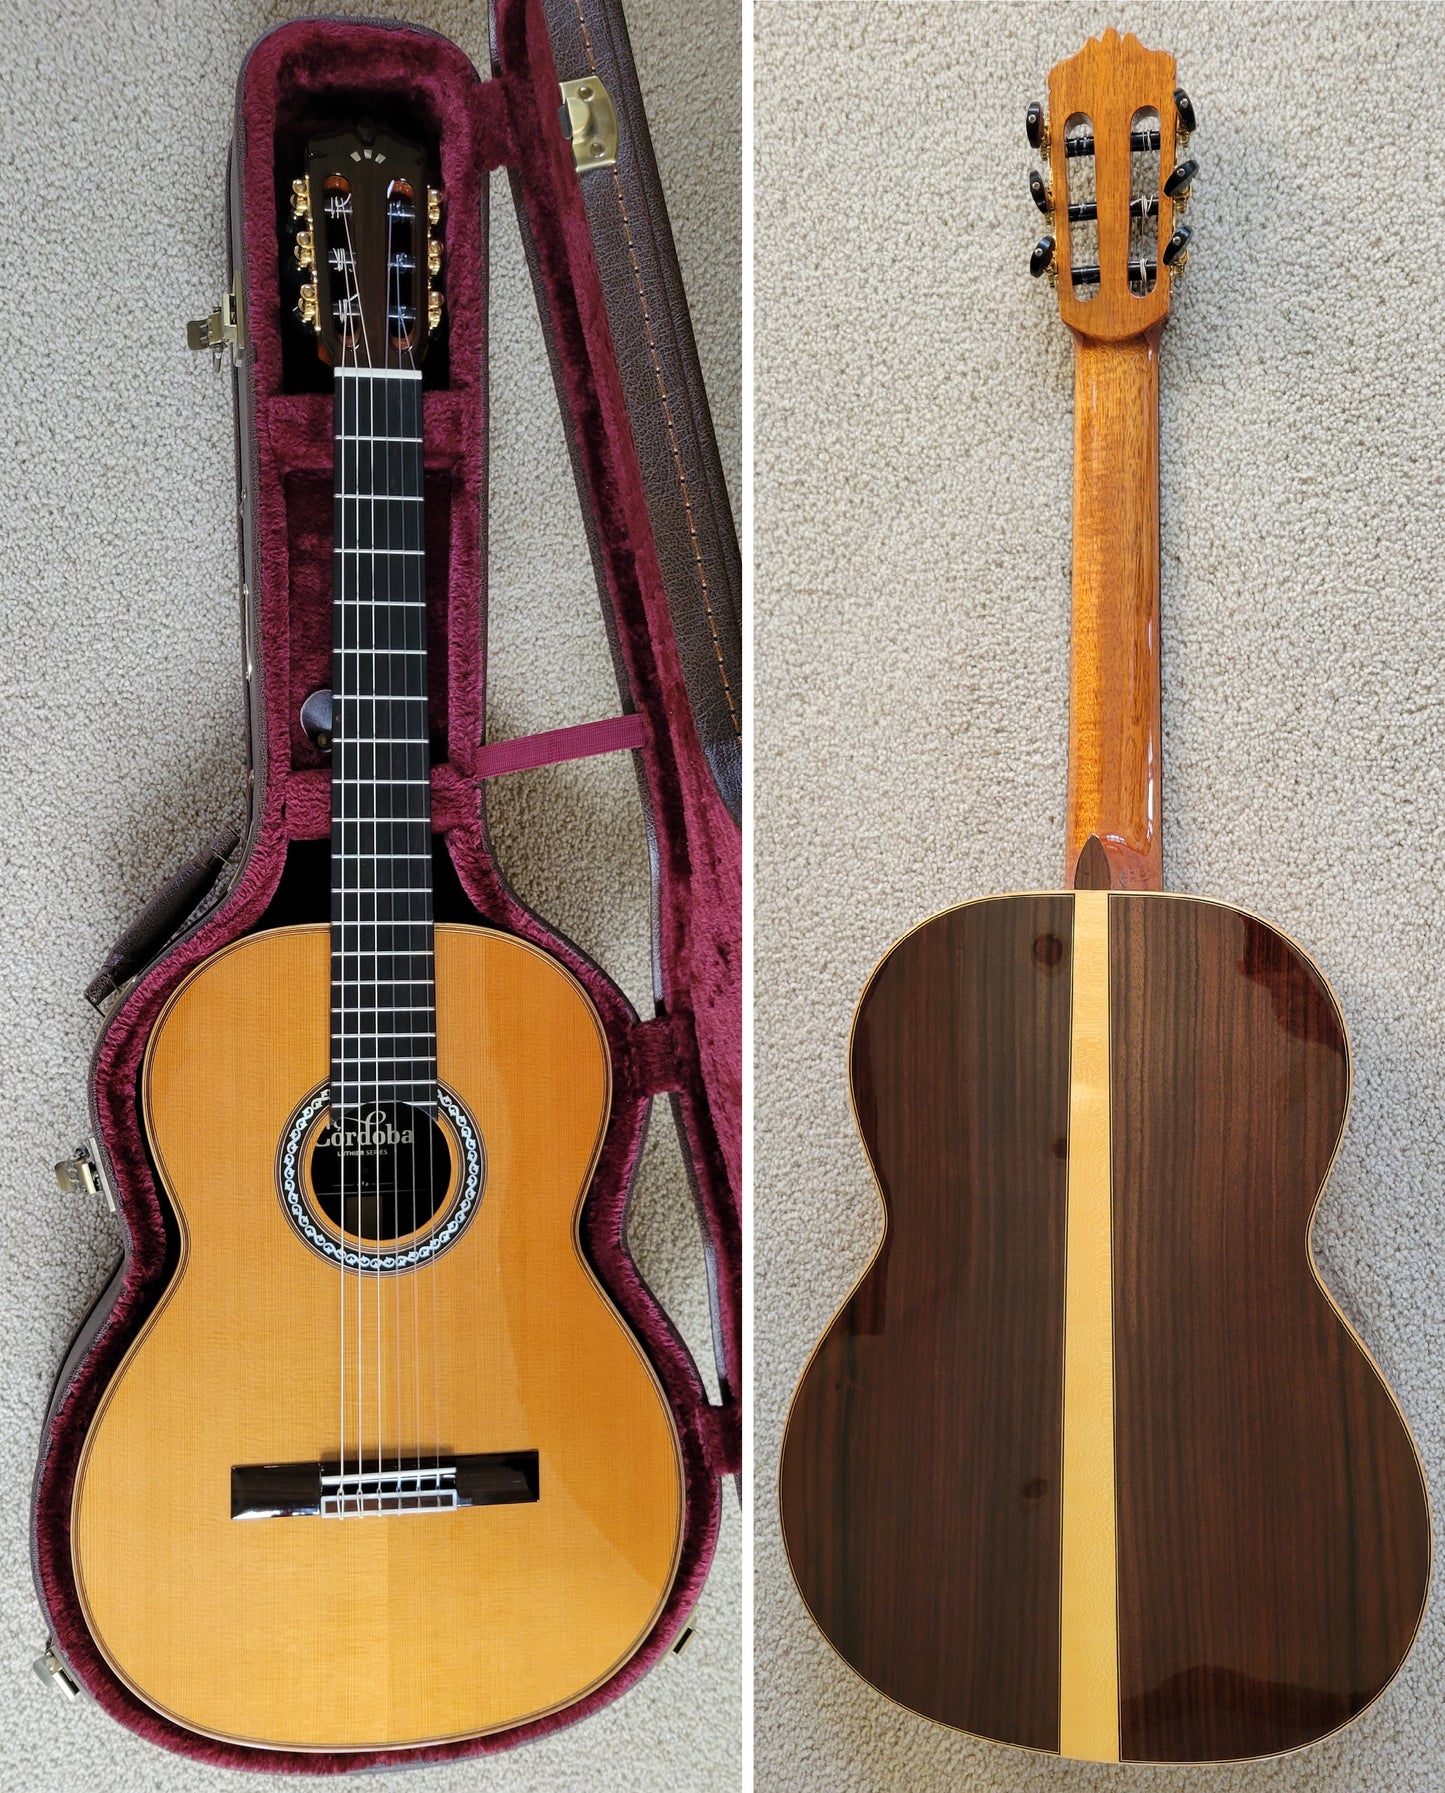 Cordoba C12 CD Cedar Traditional Classical Acoustic Guitar - New Cordoba Humicase